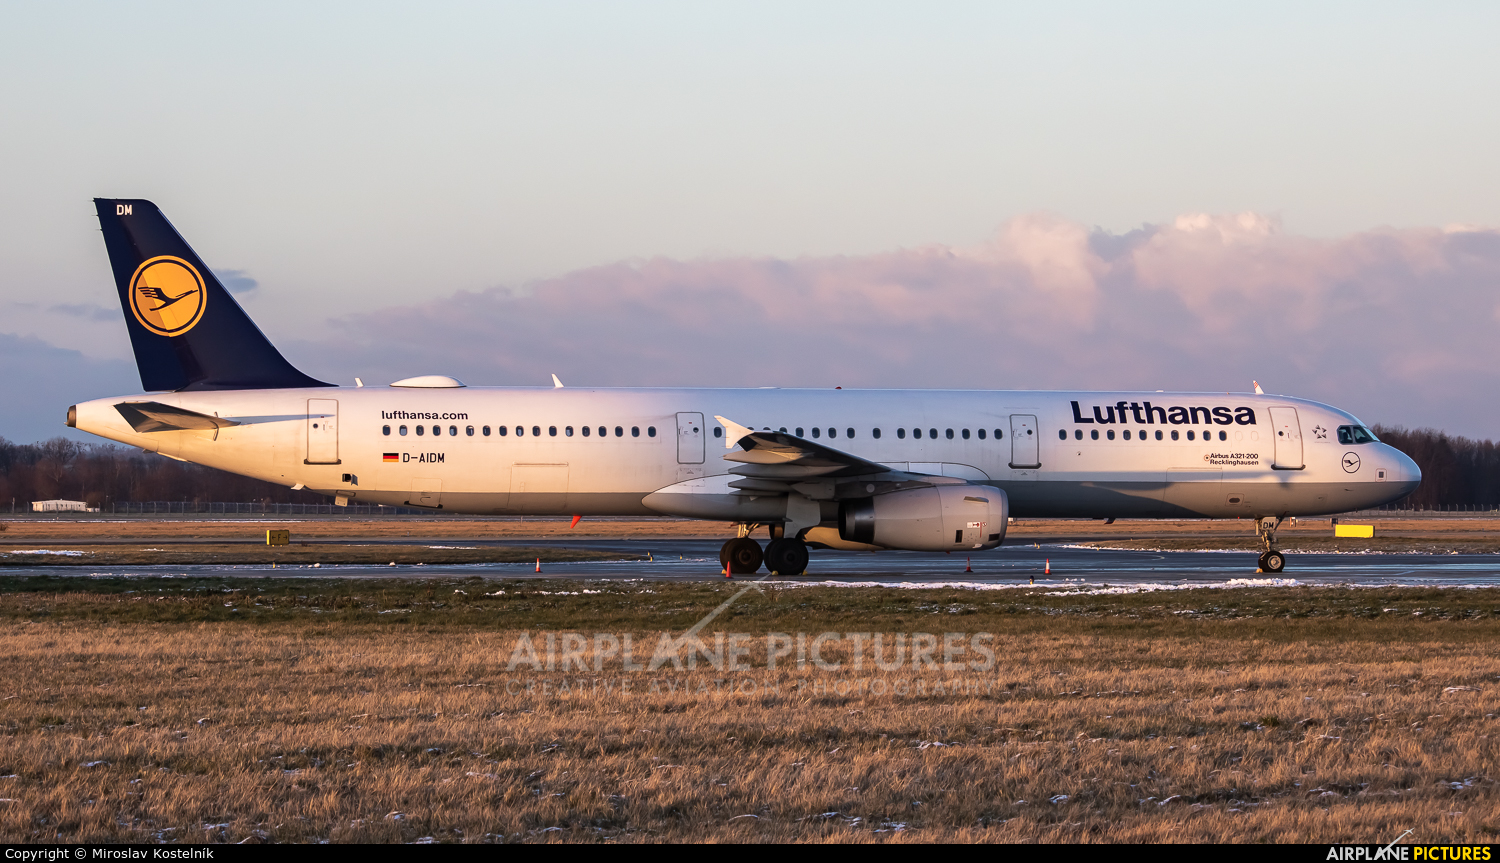 Lufthansa D-AIDM aircraft at Ostrava Mošnov